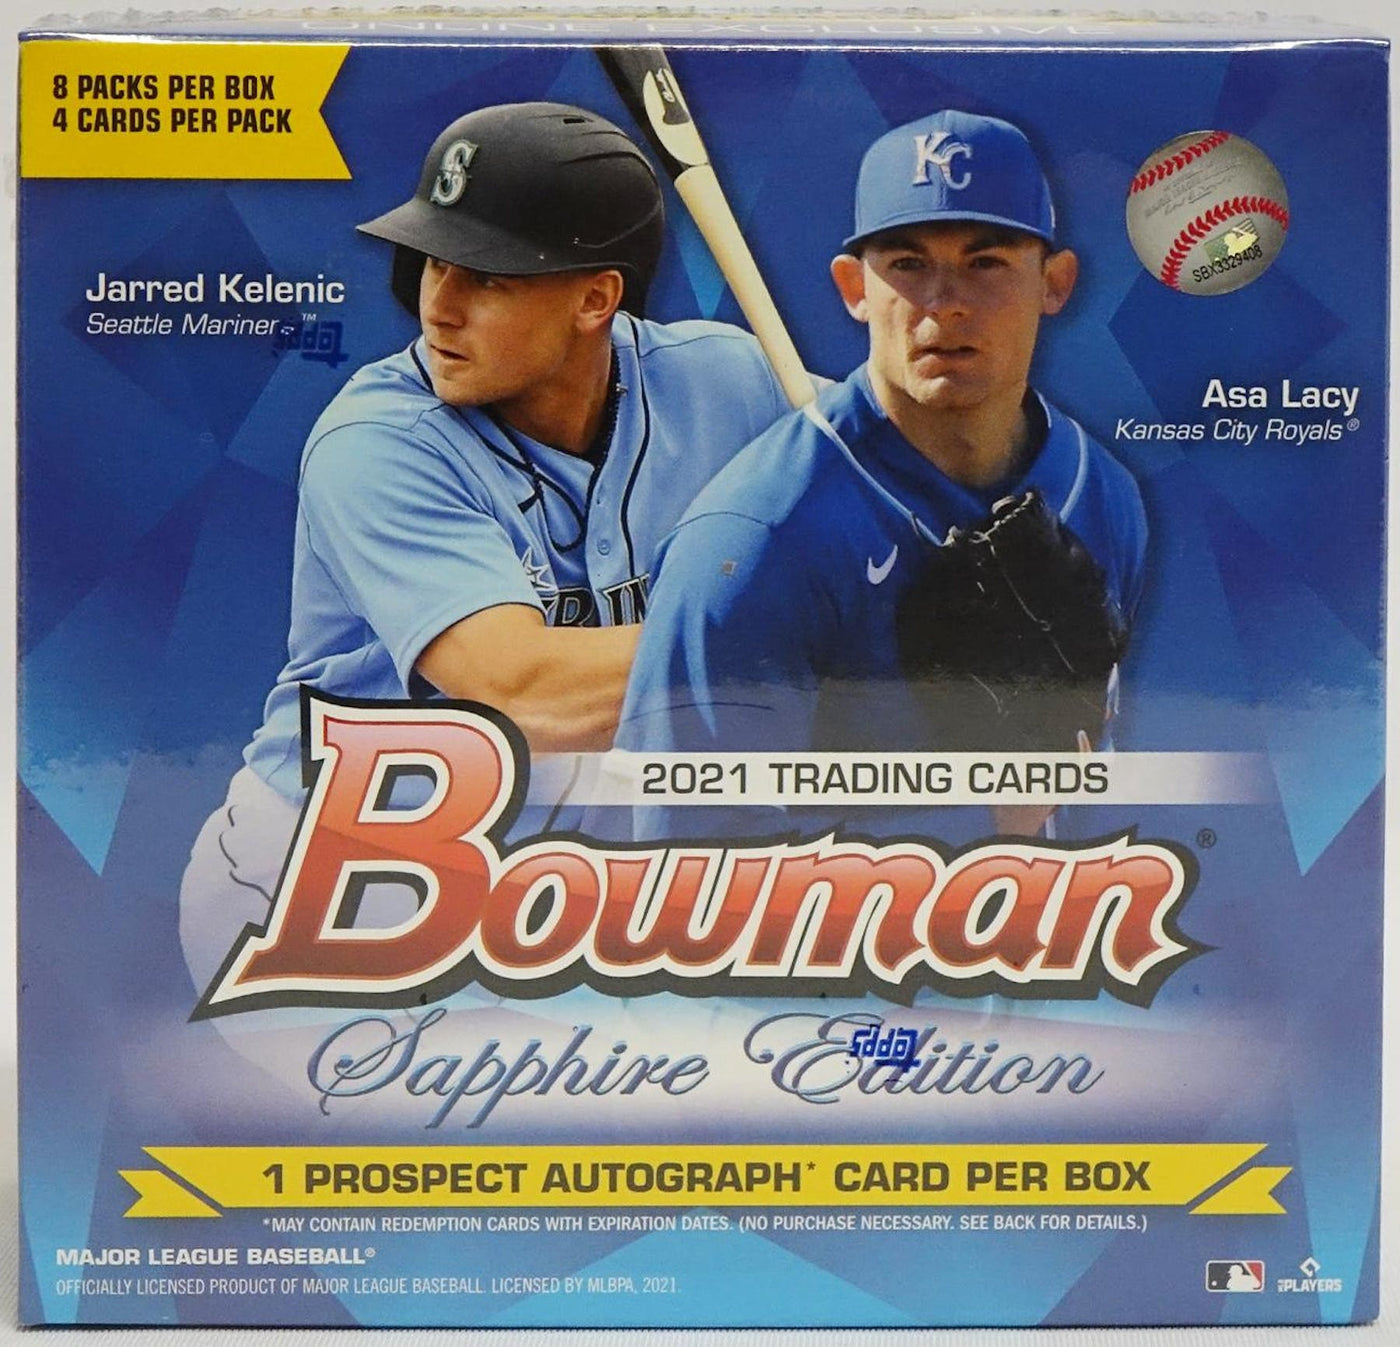 Topps 2021 Bowman Baseball Sapphire Edition Hobby Box